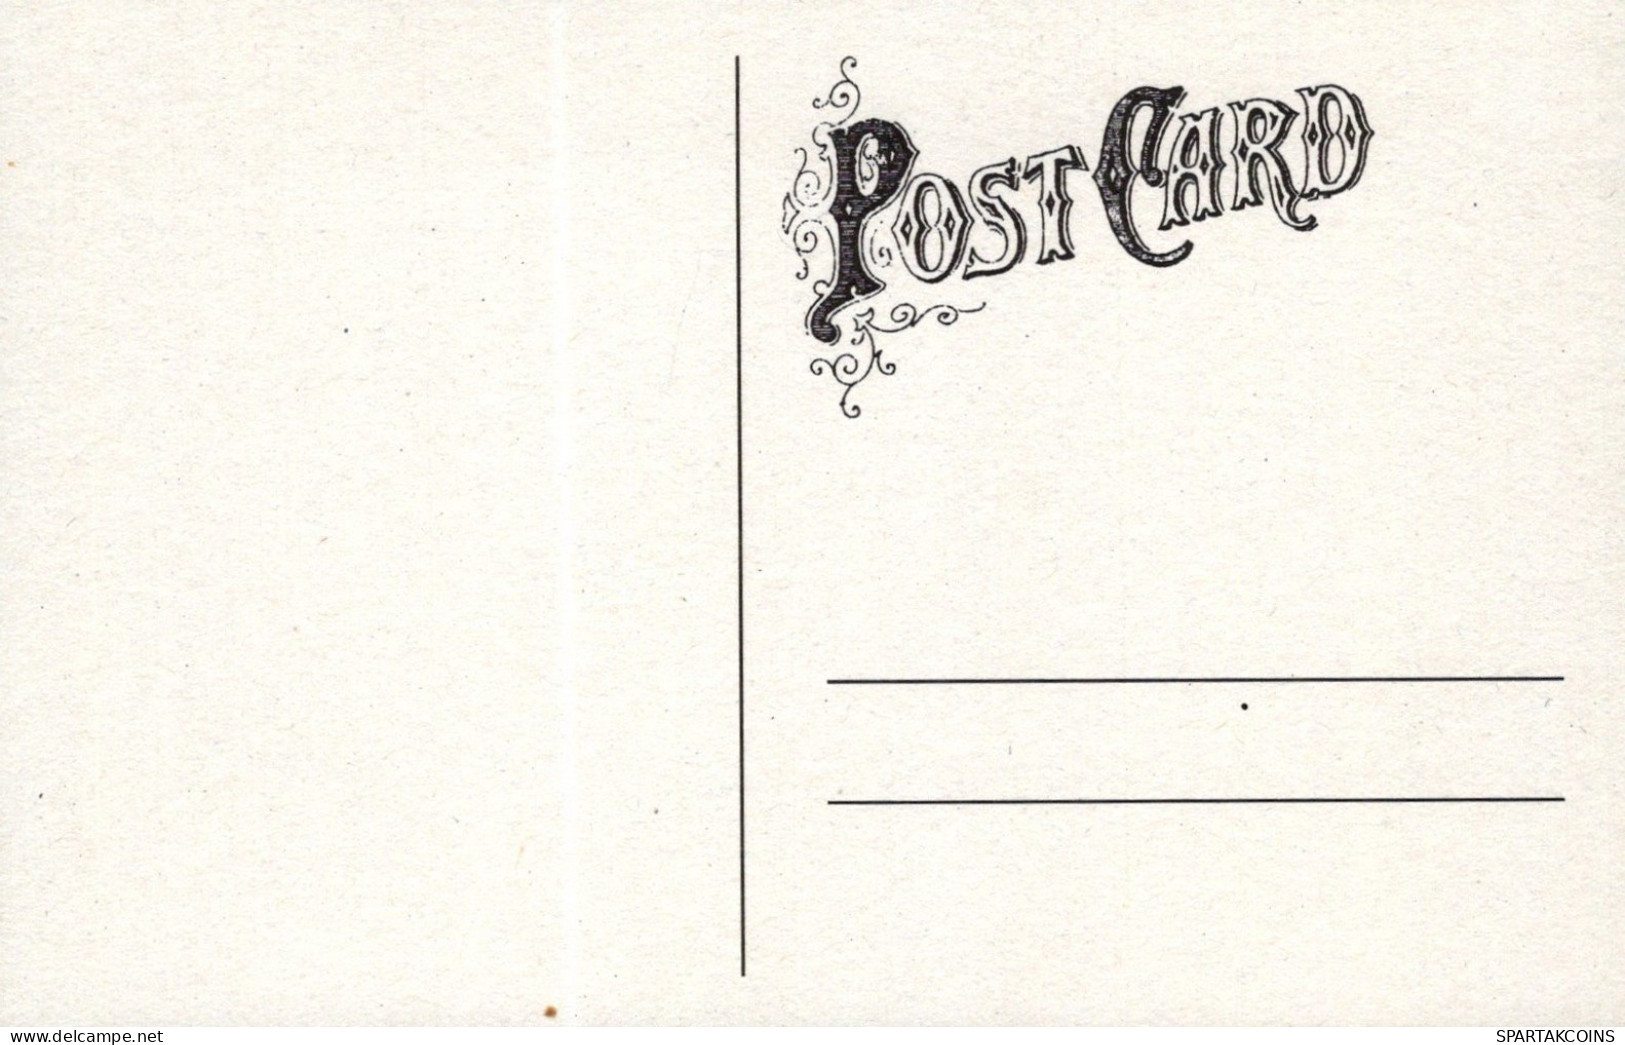 ANGEL CHRISTMAS Holidays Vintage Postcard CPSMPF #PAG736.GB - Angels